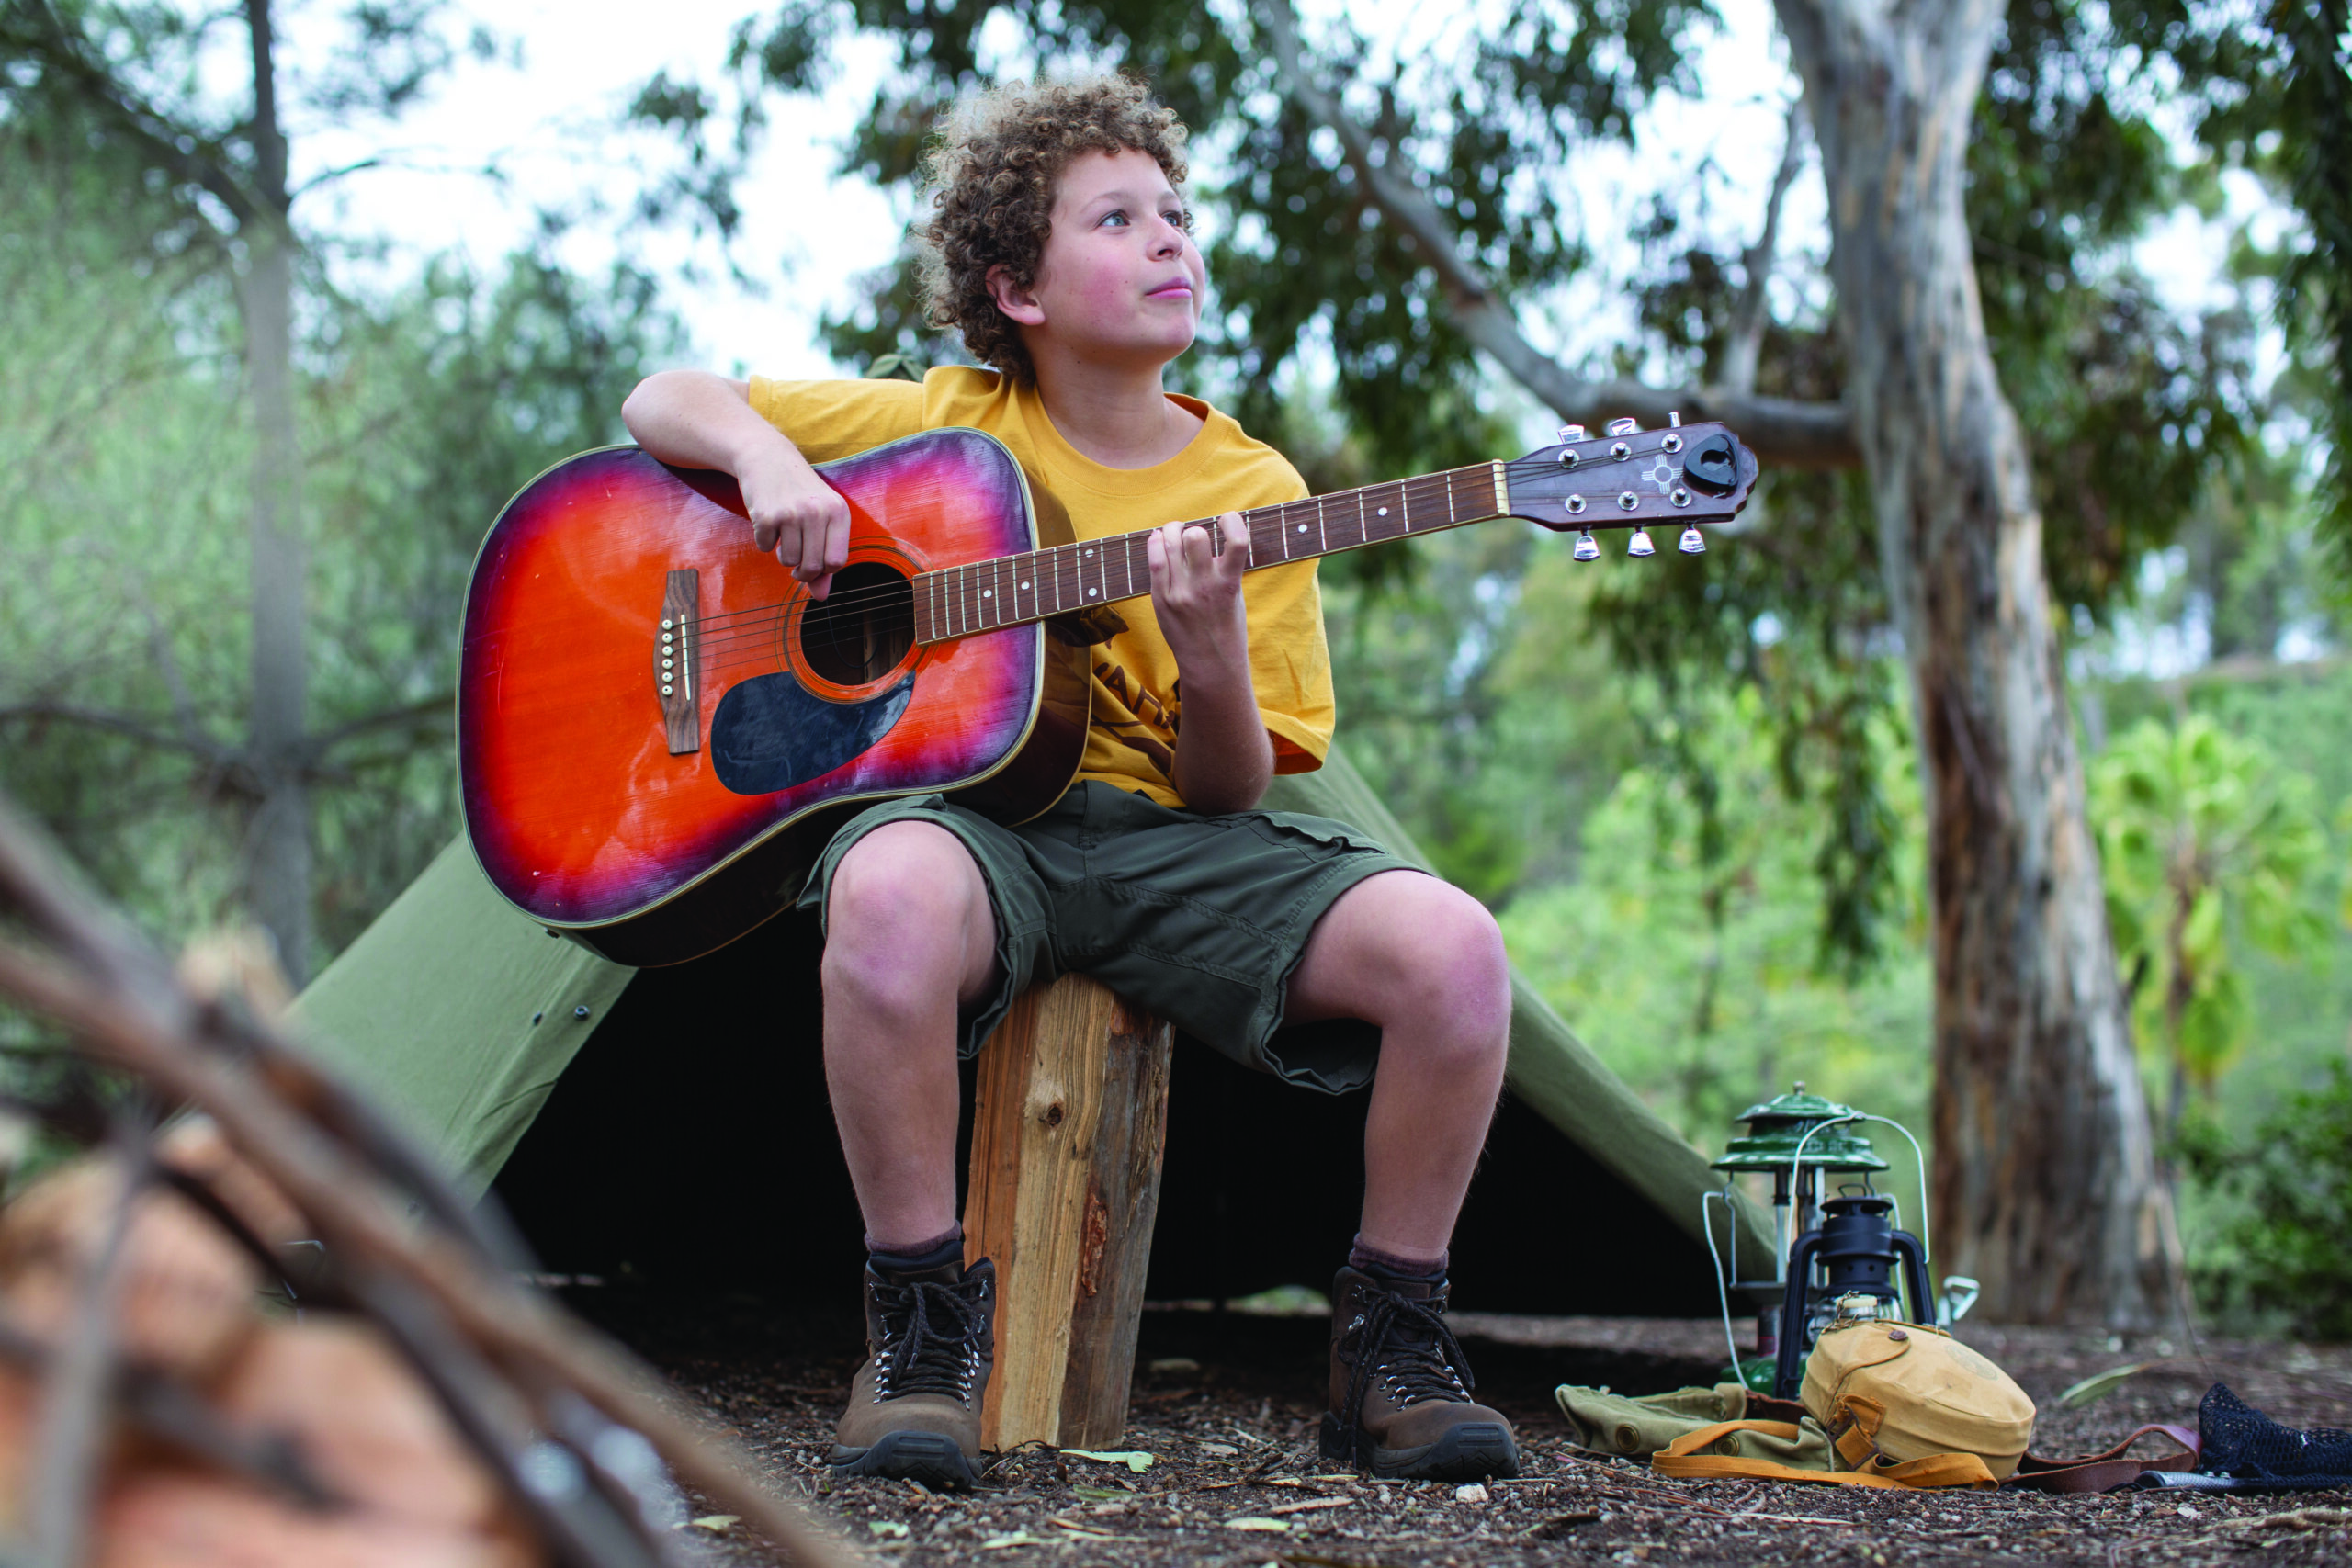 Boy playing guitar at a Jewish summer camp campsite